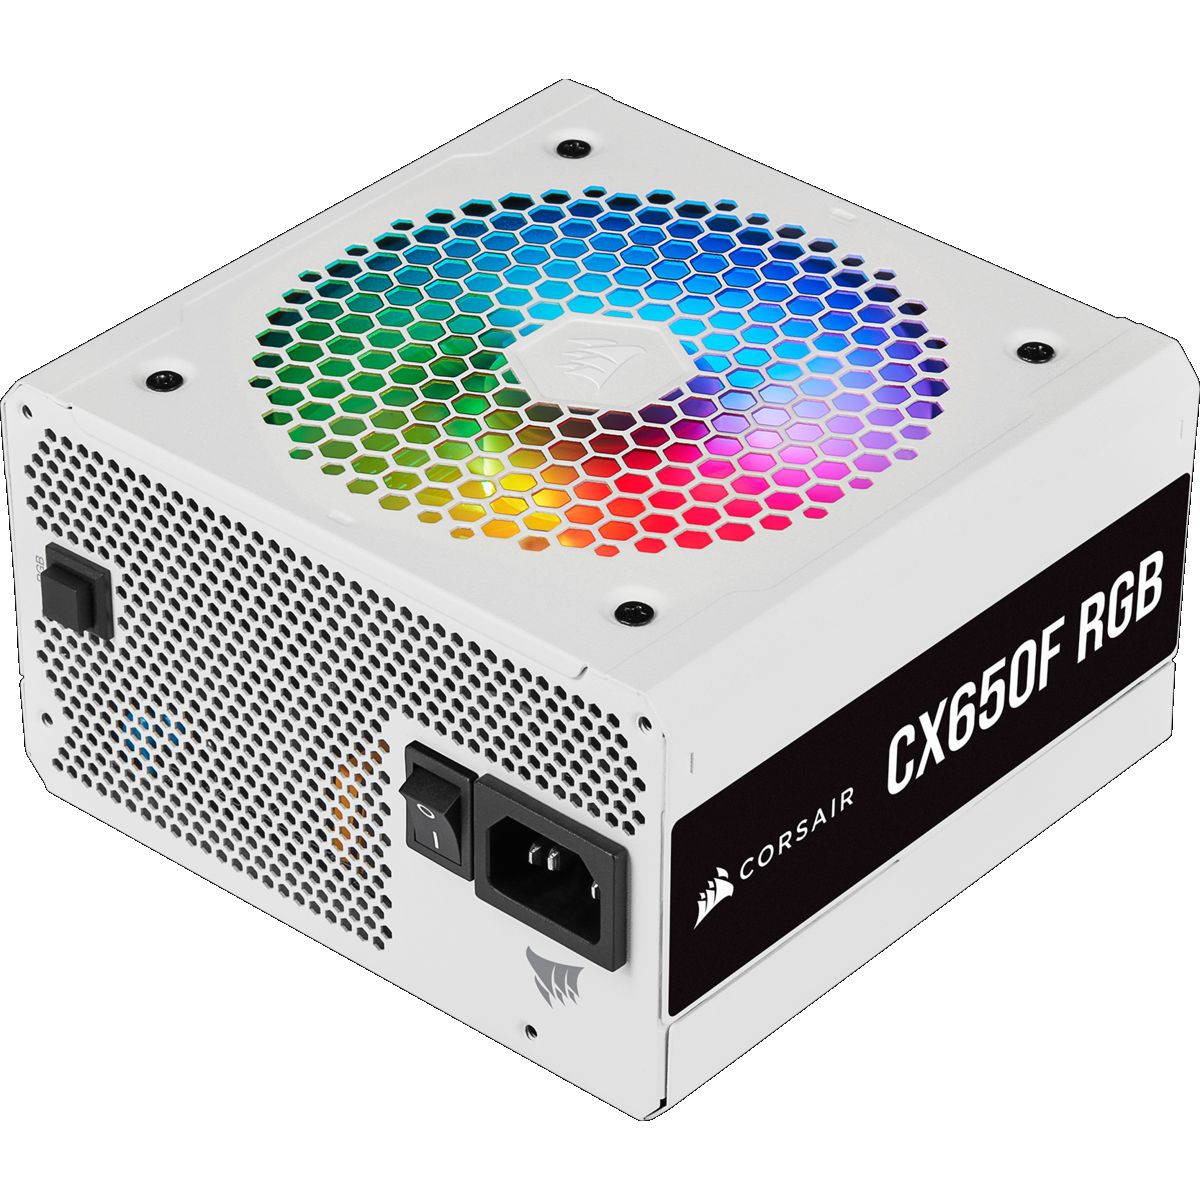 CP-9020226-EU - Fuente CORSAIR CX650F 650W RGB 80+ Bronze Blanco (CP-9020226-EU)